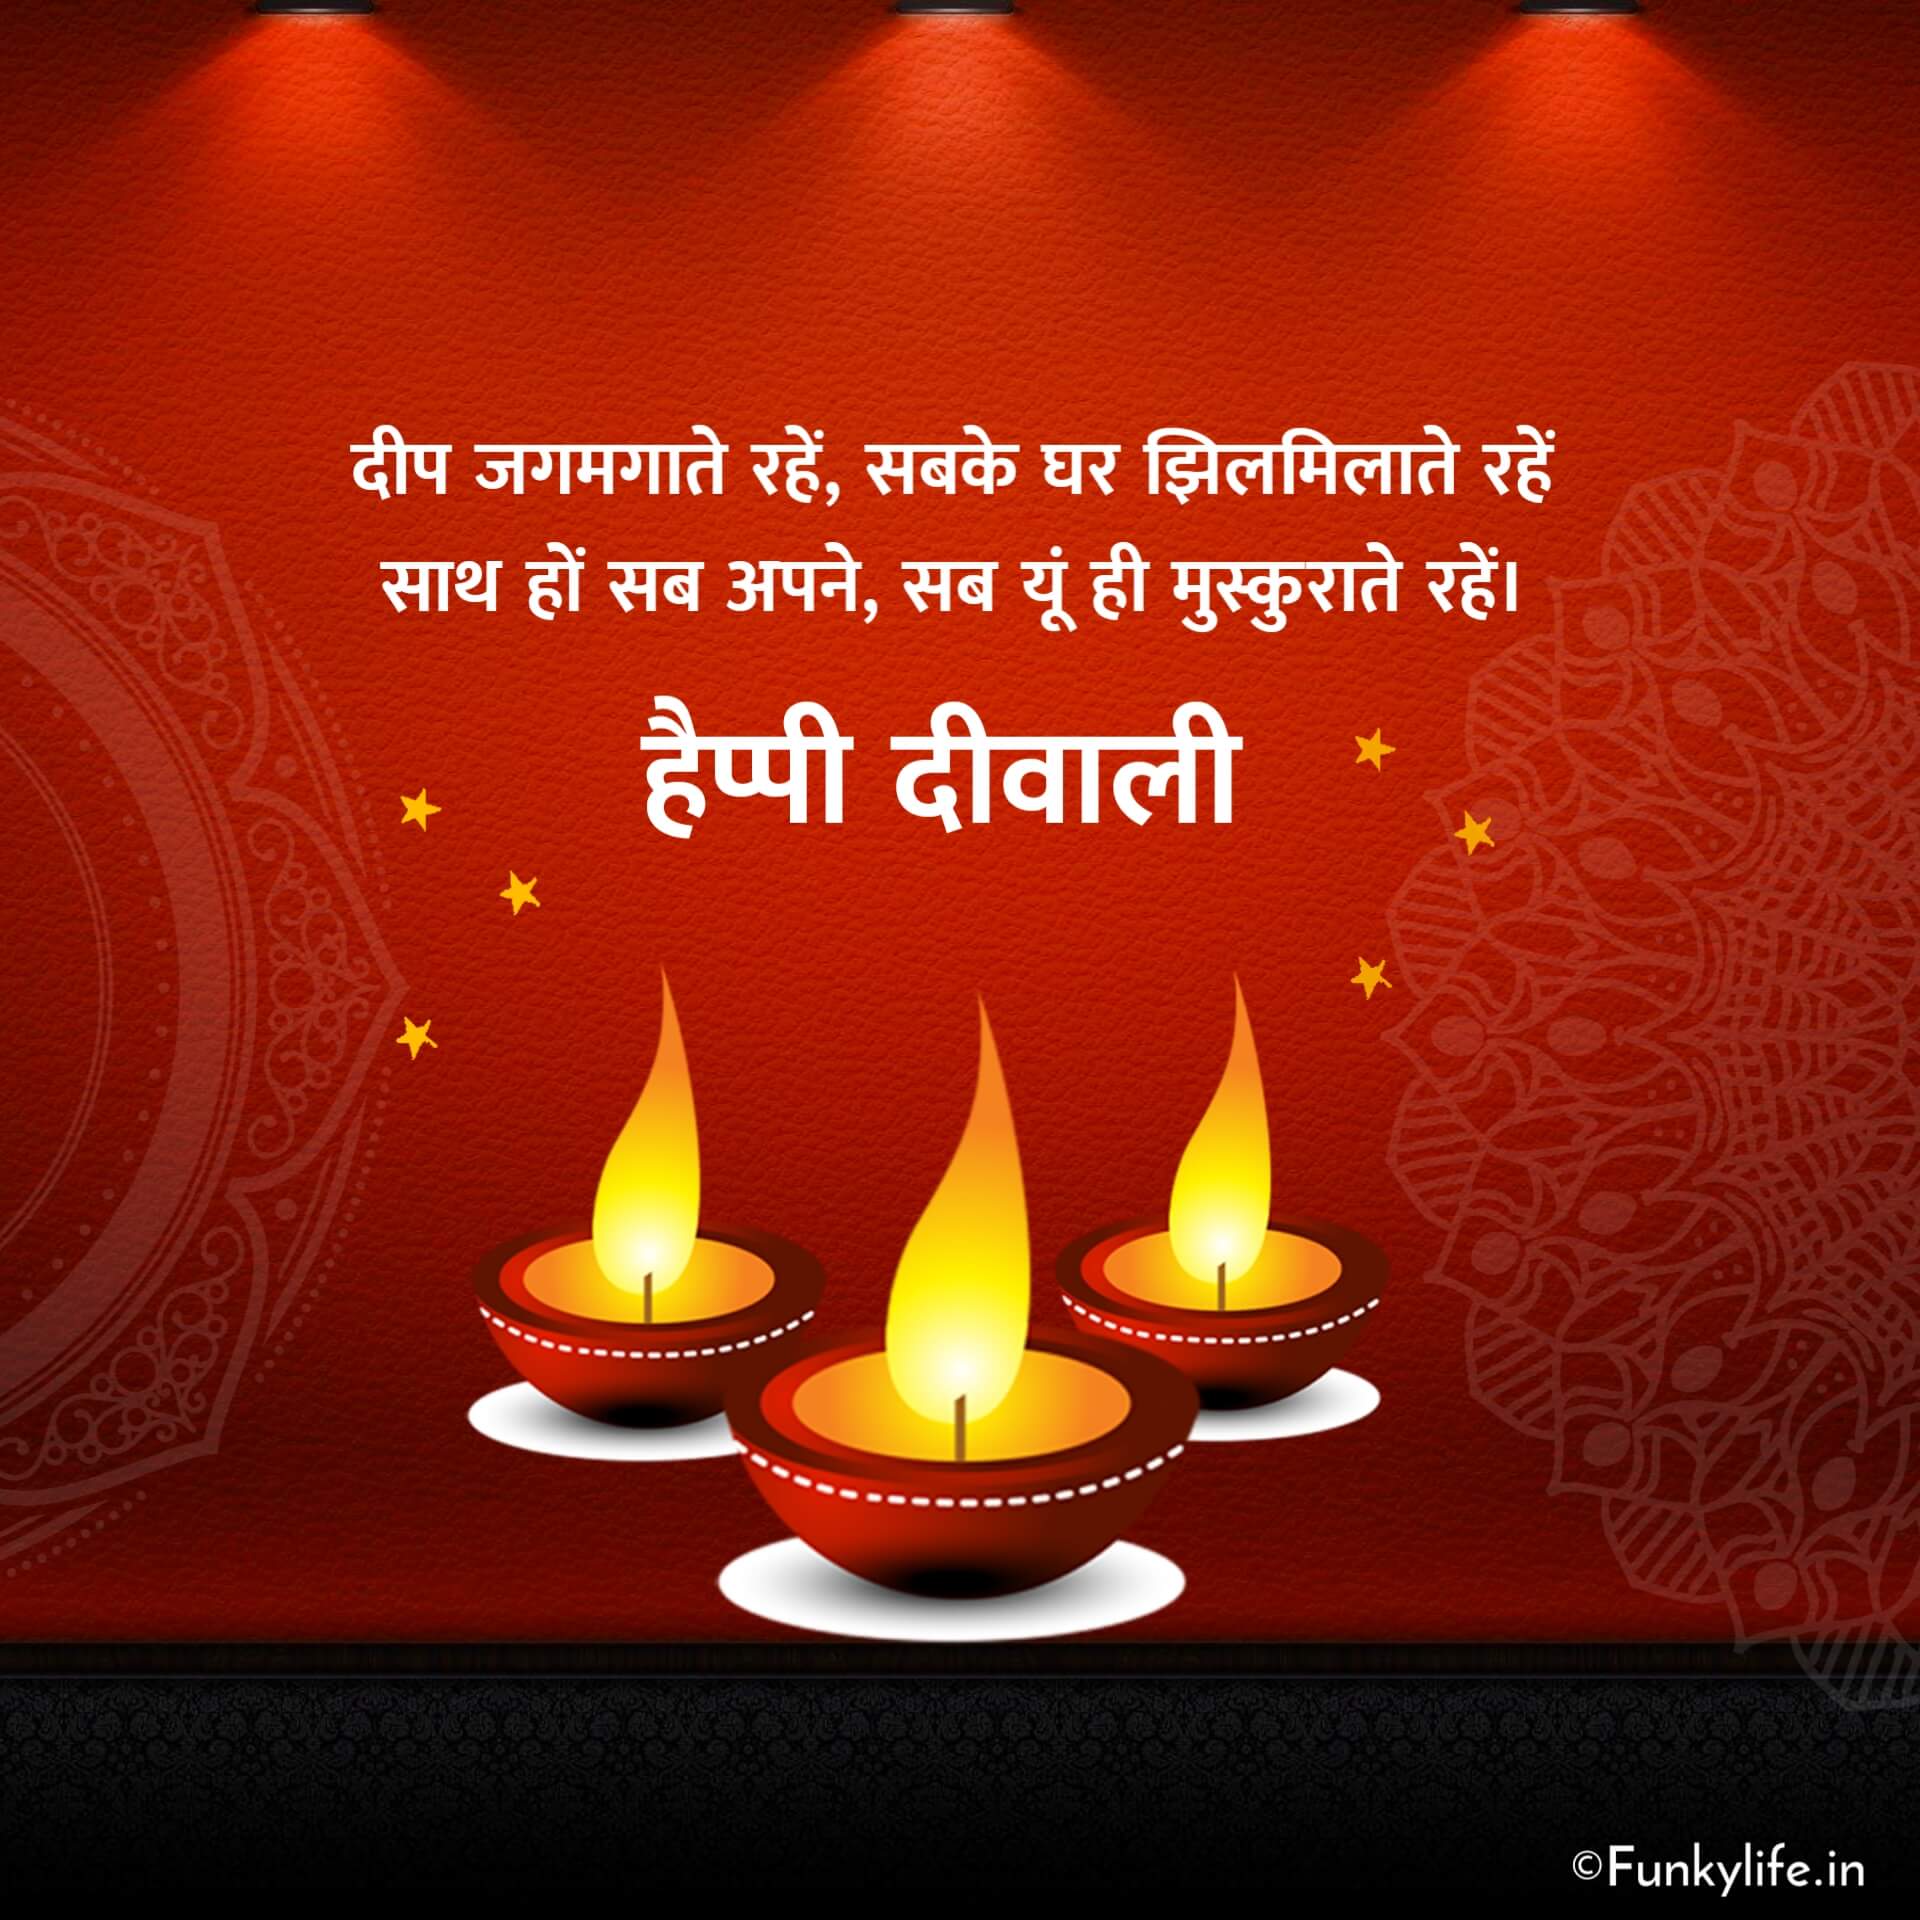 Hindi Diwali images